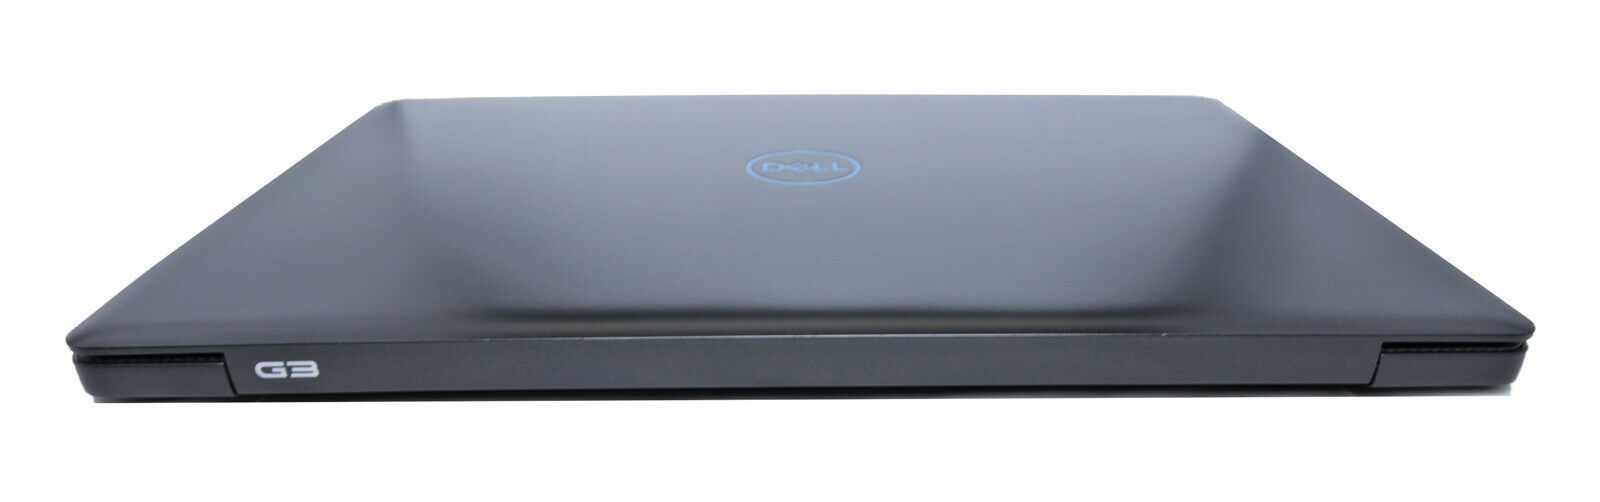 Dell G3 15 Ips Gaming Laptop Core I7 8750h Gtx 1060 Max Q 256gb 1tb 16gb Ram Cruisetech